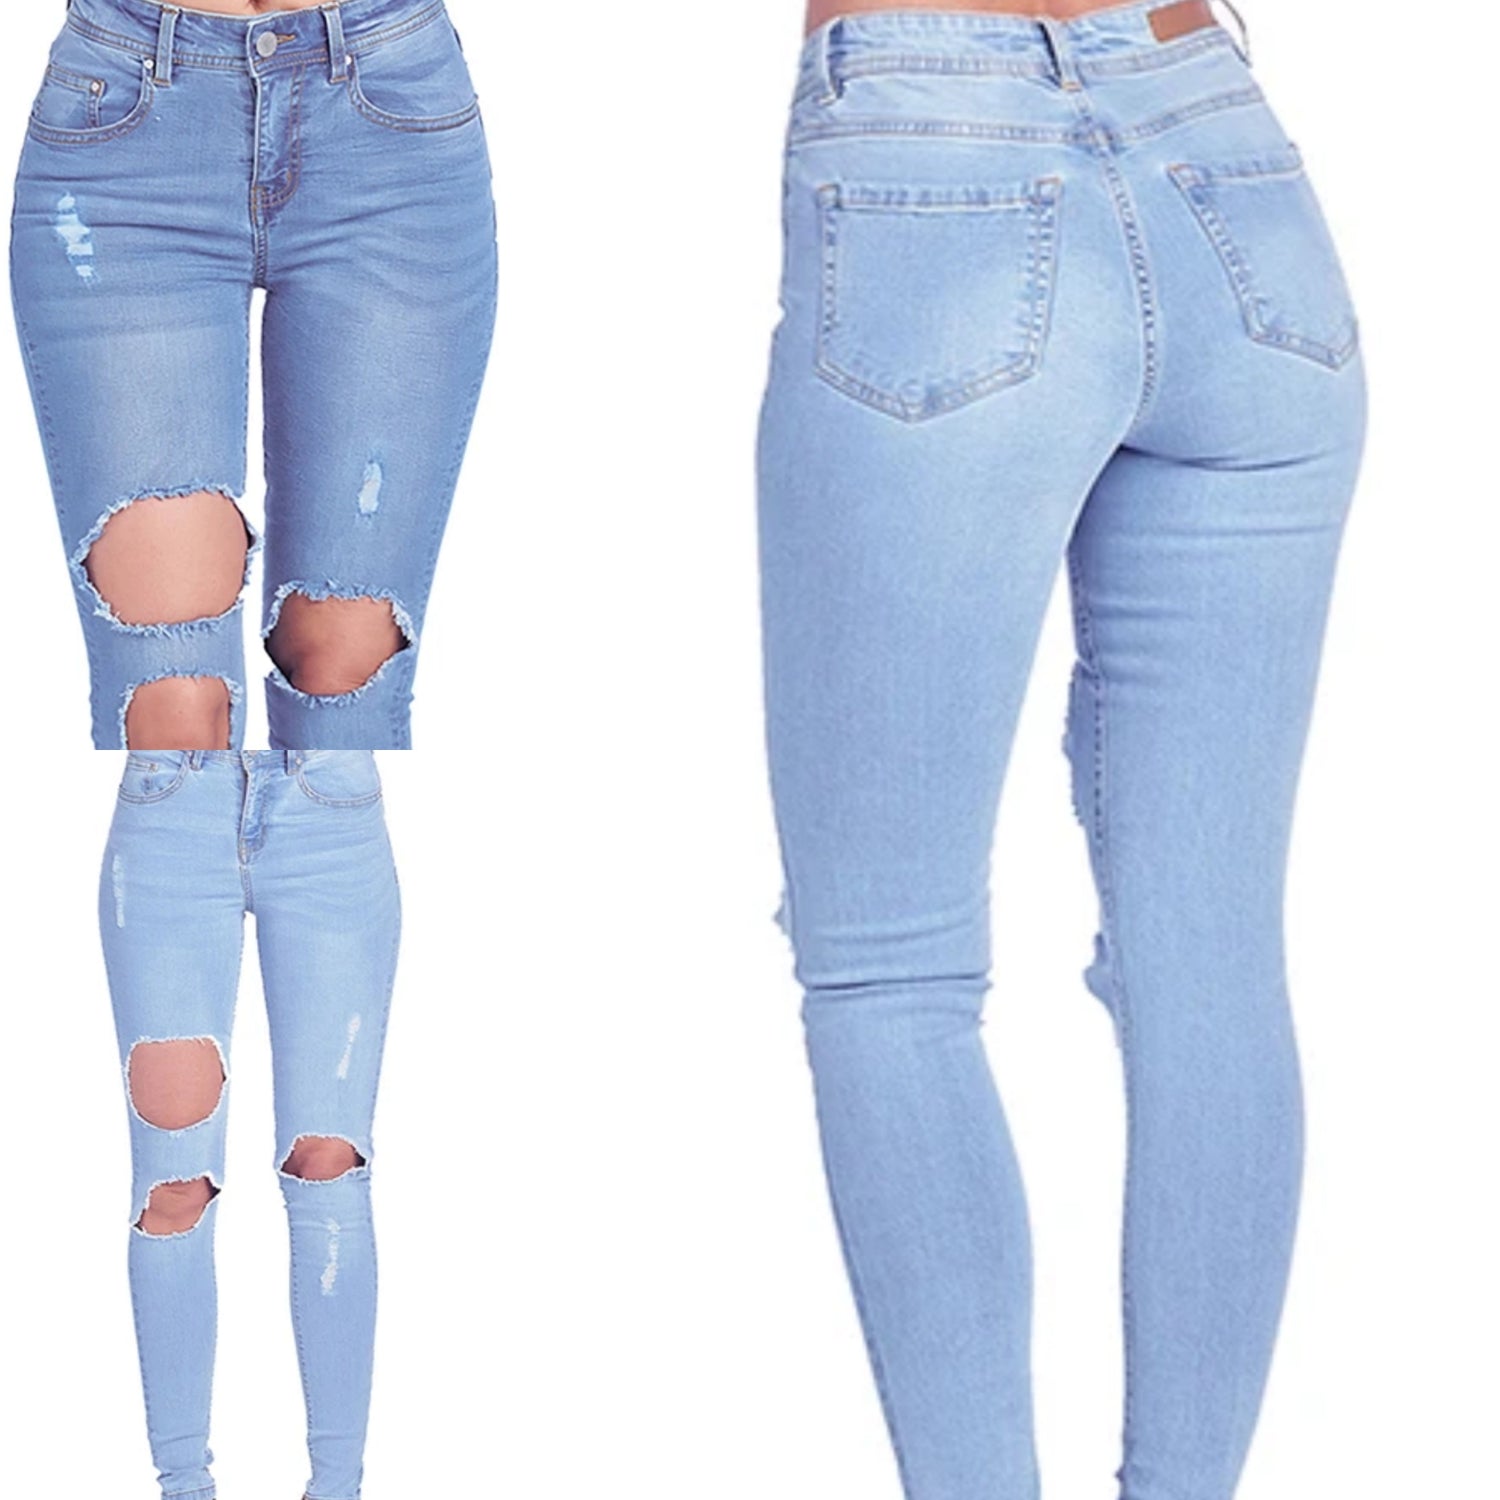 Bigersell Women's Jean Leggings Full Length Pants Jeans, 57% OFF